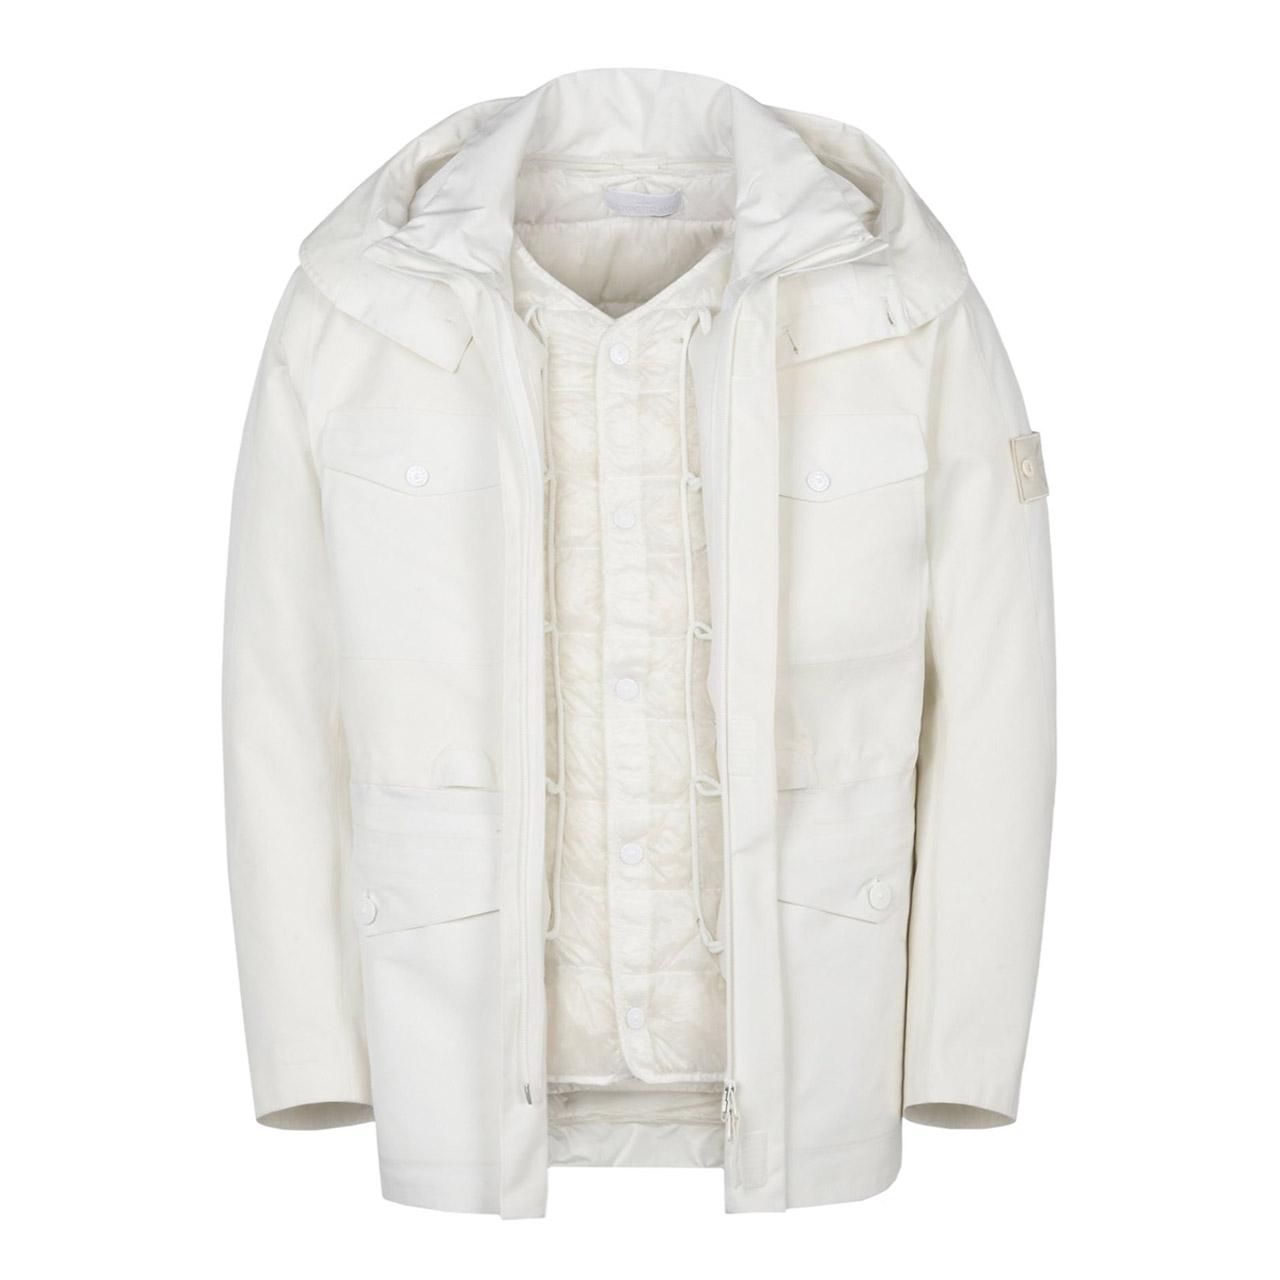 Stone Island Tank Shield "ghost Piece" Jacket in White for Men - Lyst